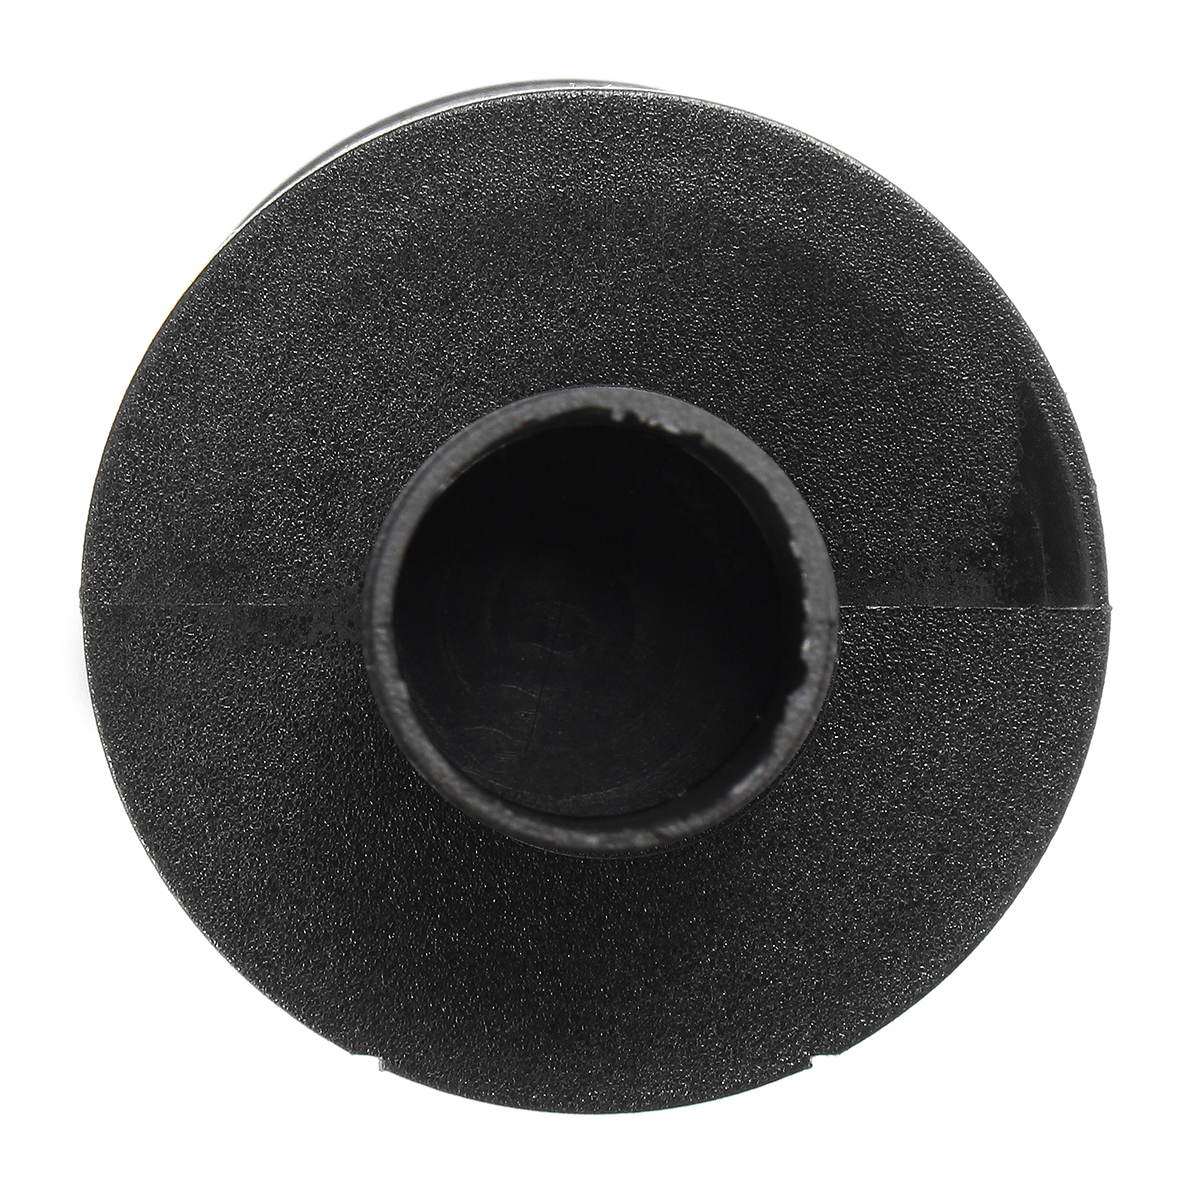 25mm-Air-Intake-Filter-Silencer-For-Dometic-Eberspacher-Webasto-Diesel-Heater-1409798-10